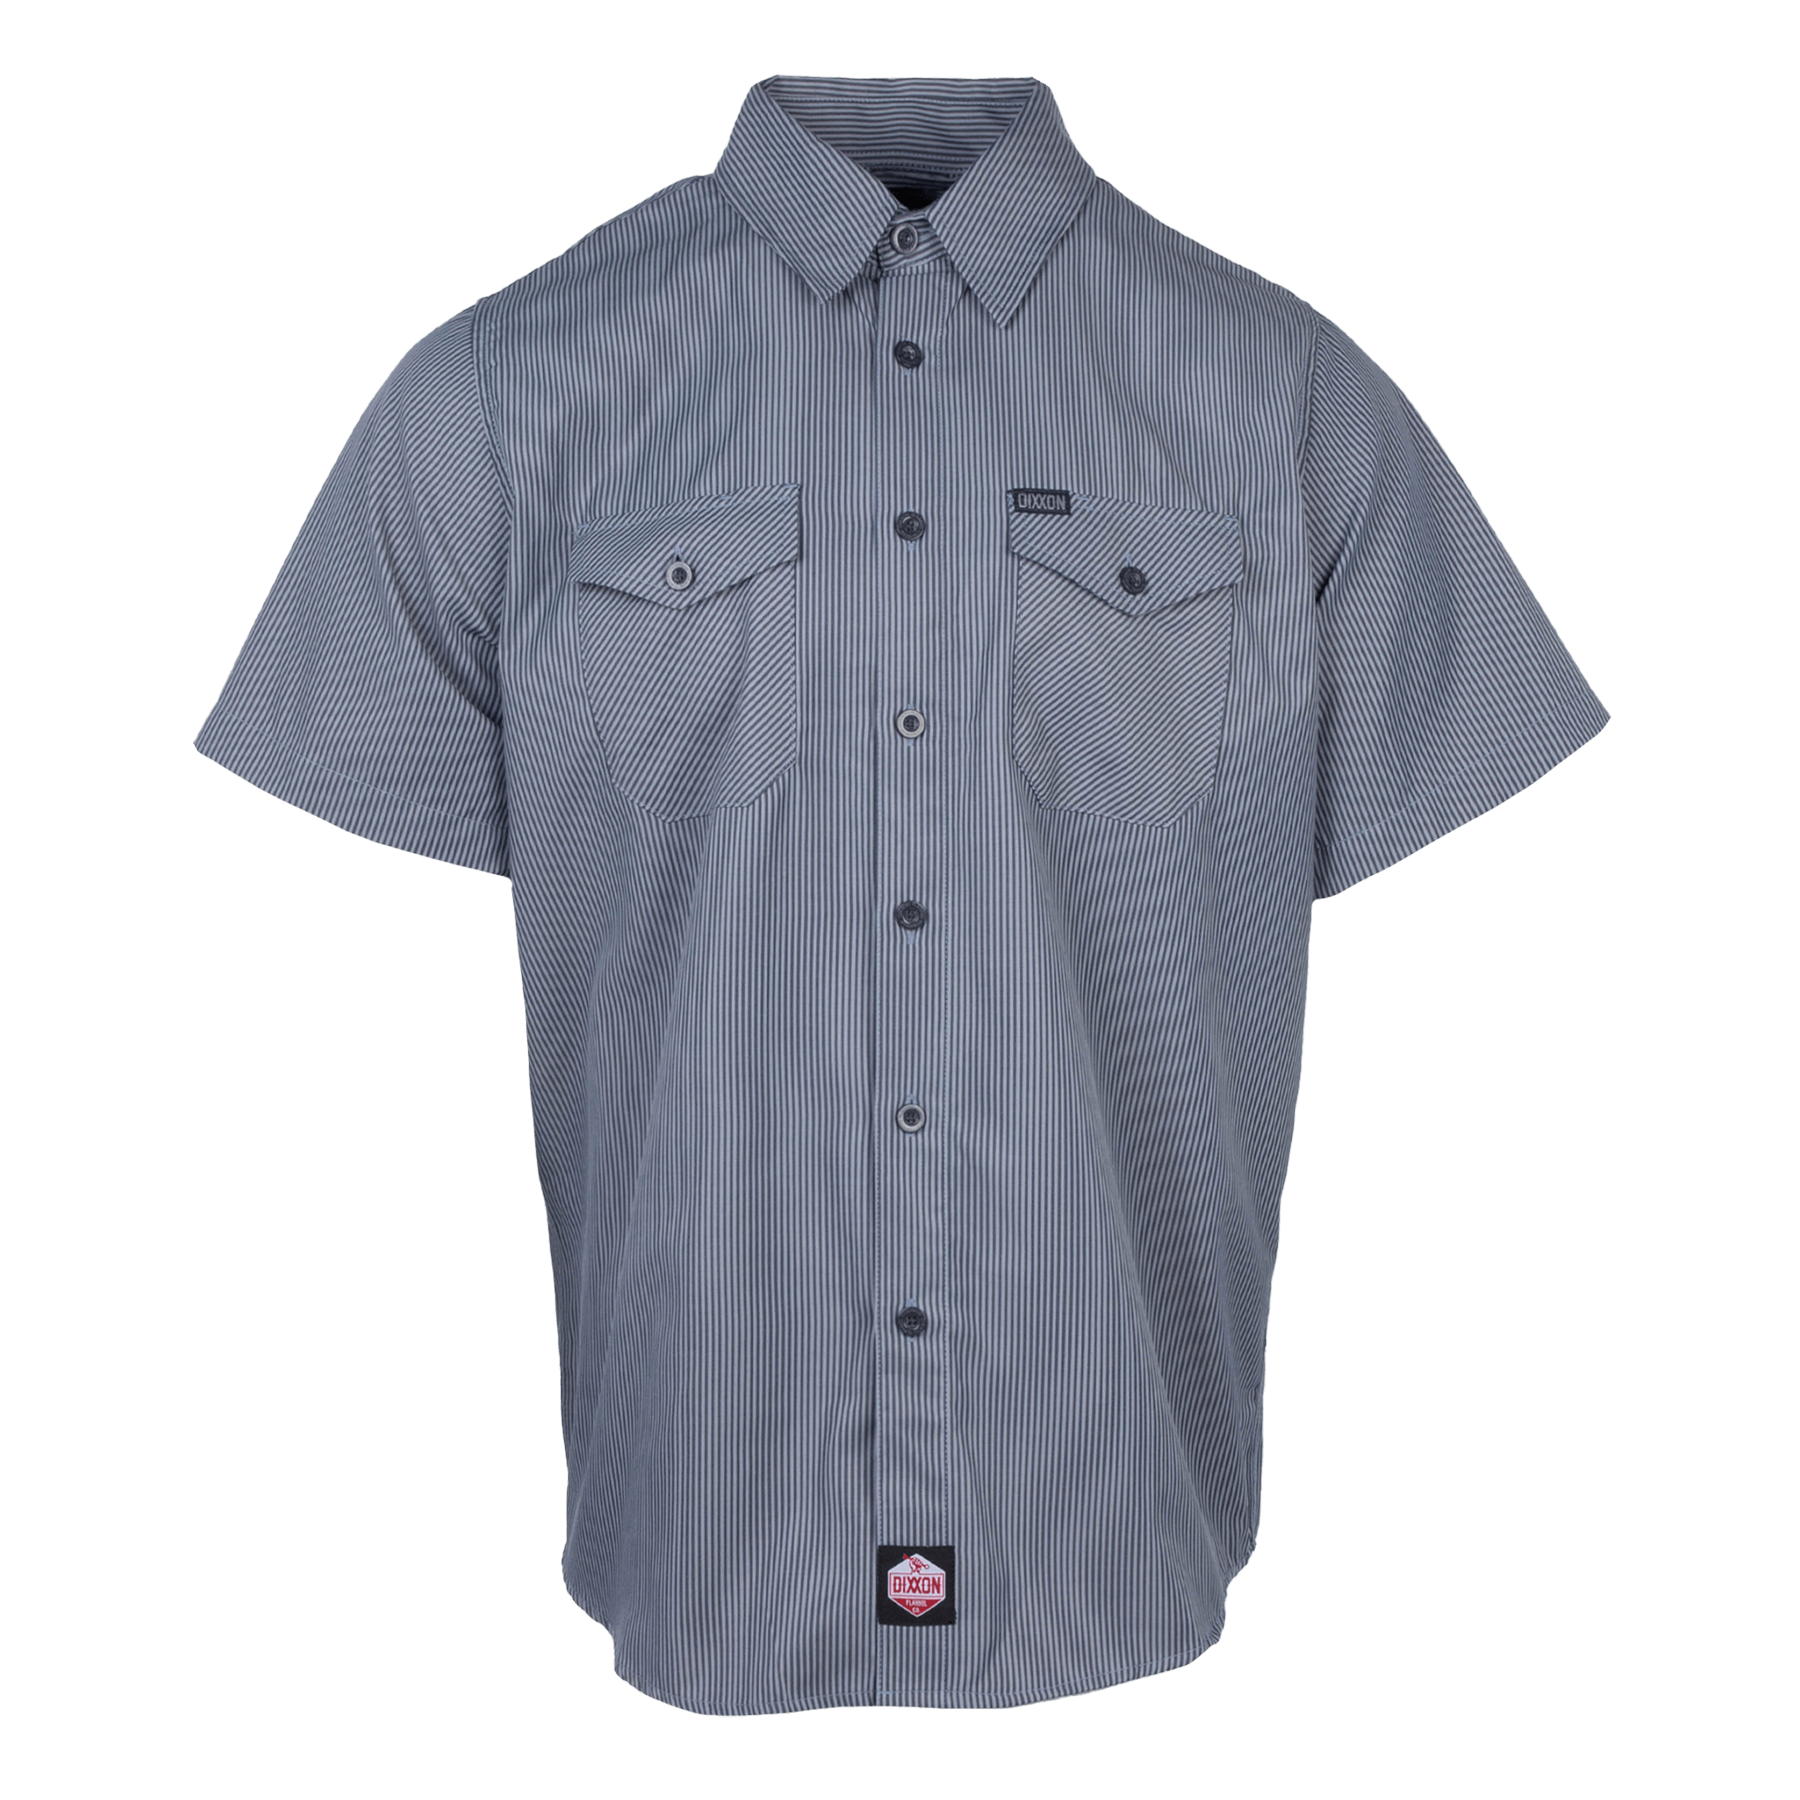 WorkForce Short Sleeve Work Shirt - Charcoal & Navy - Dixxon Flannel Co.